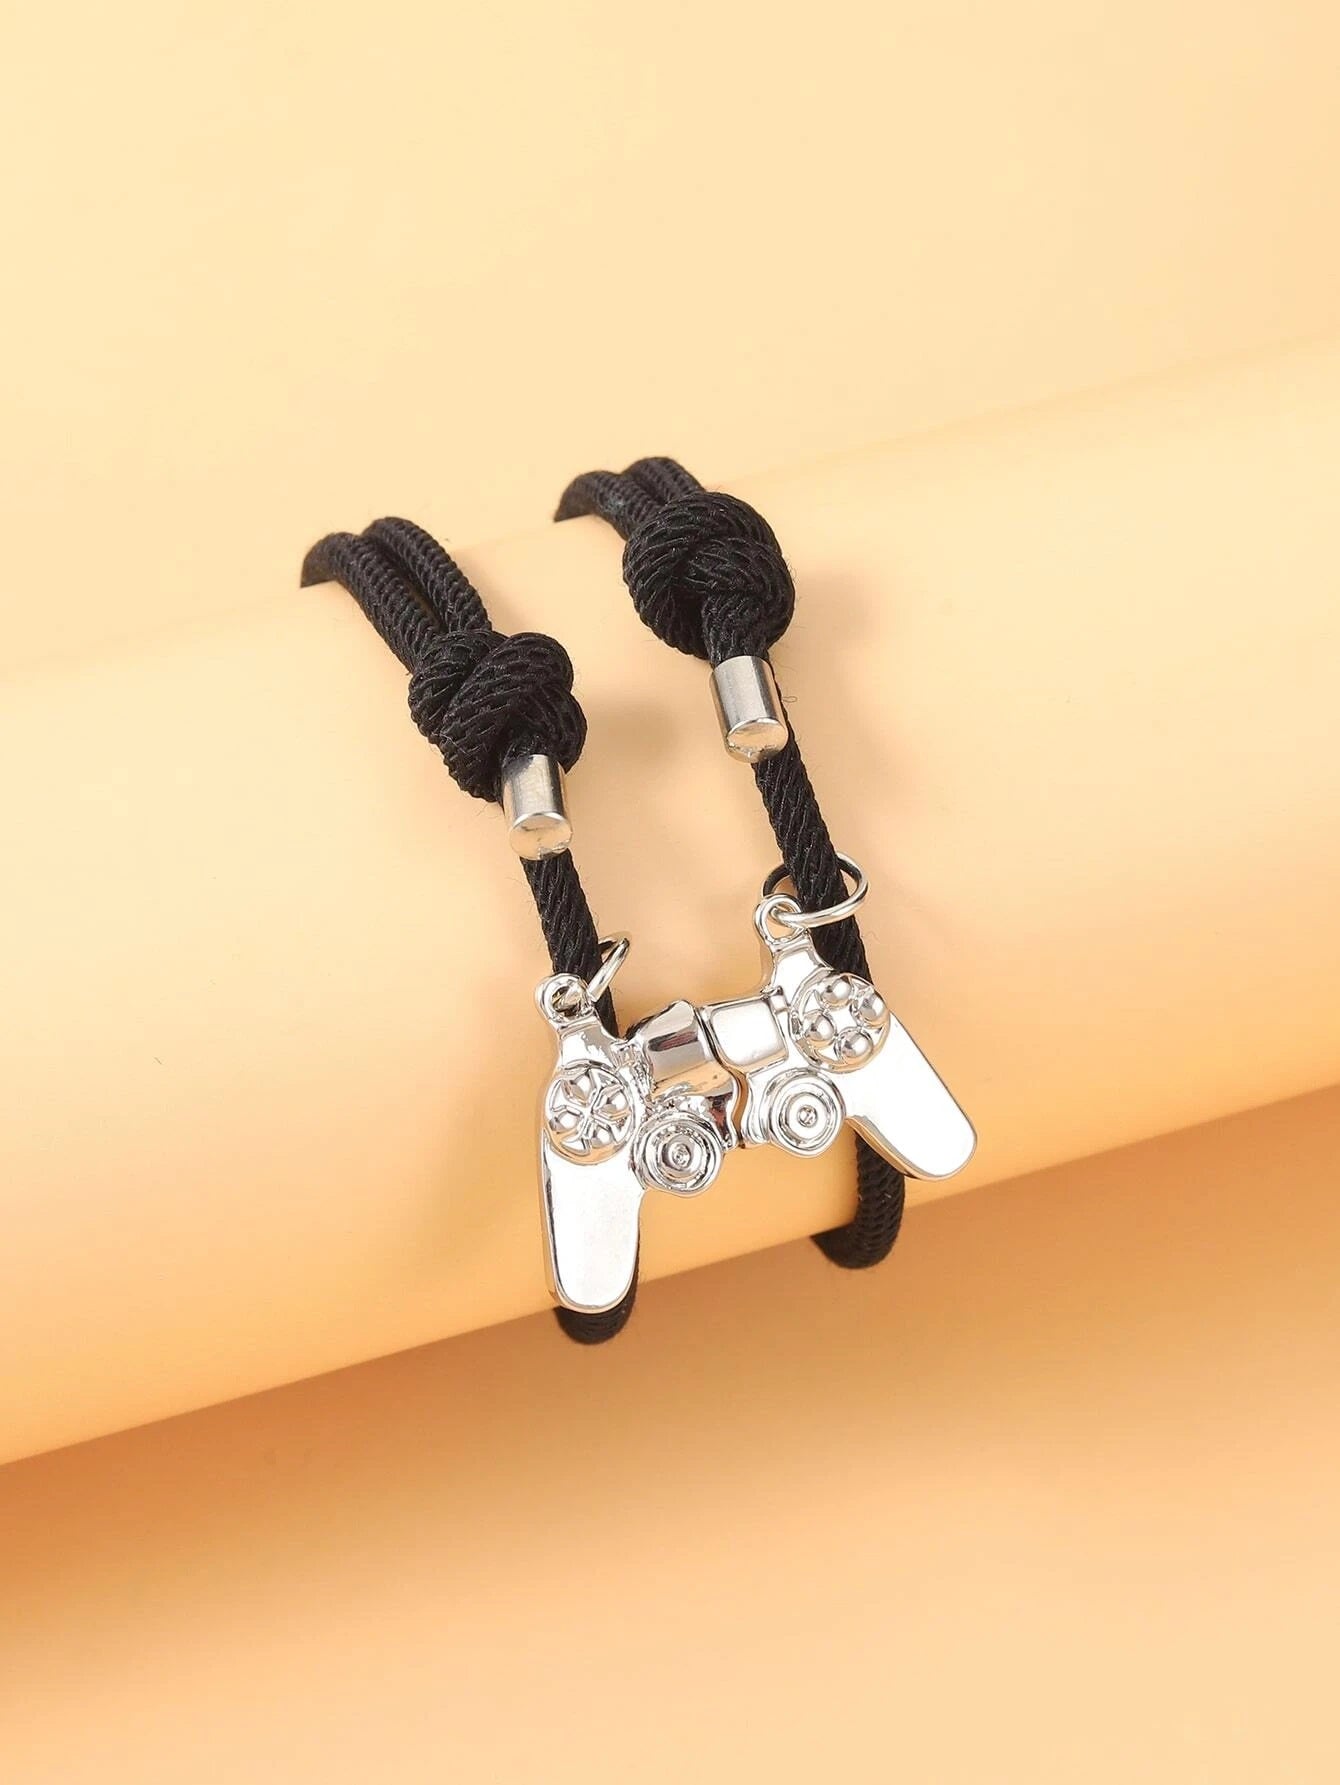 Magnetic Couple Gaming Bracelets